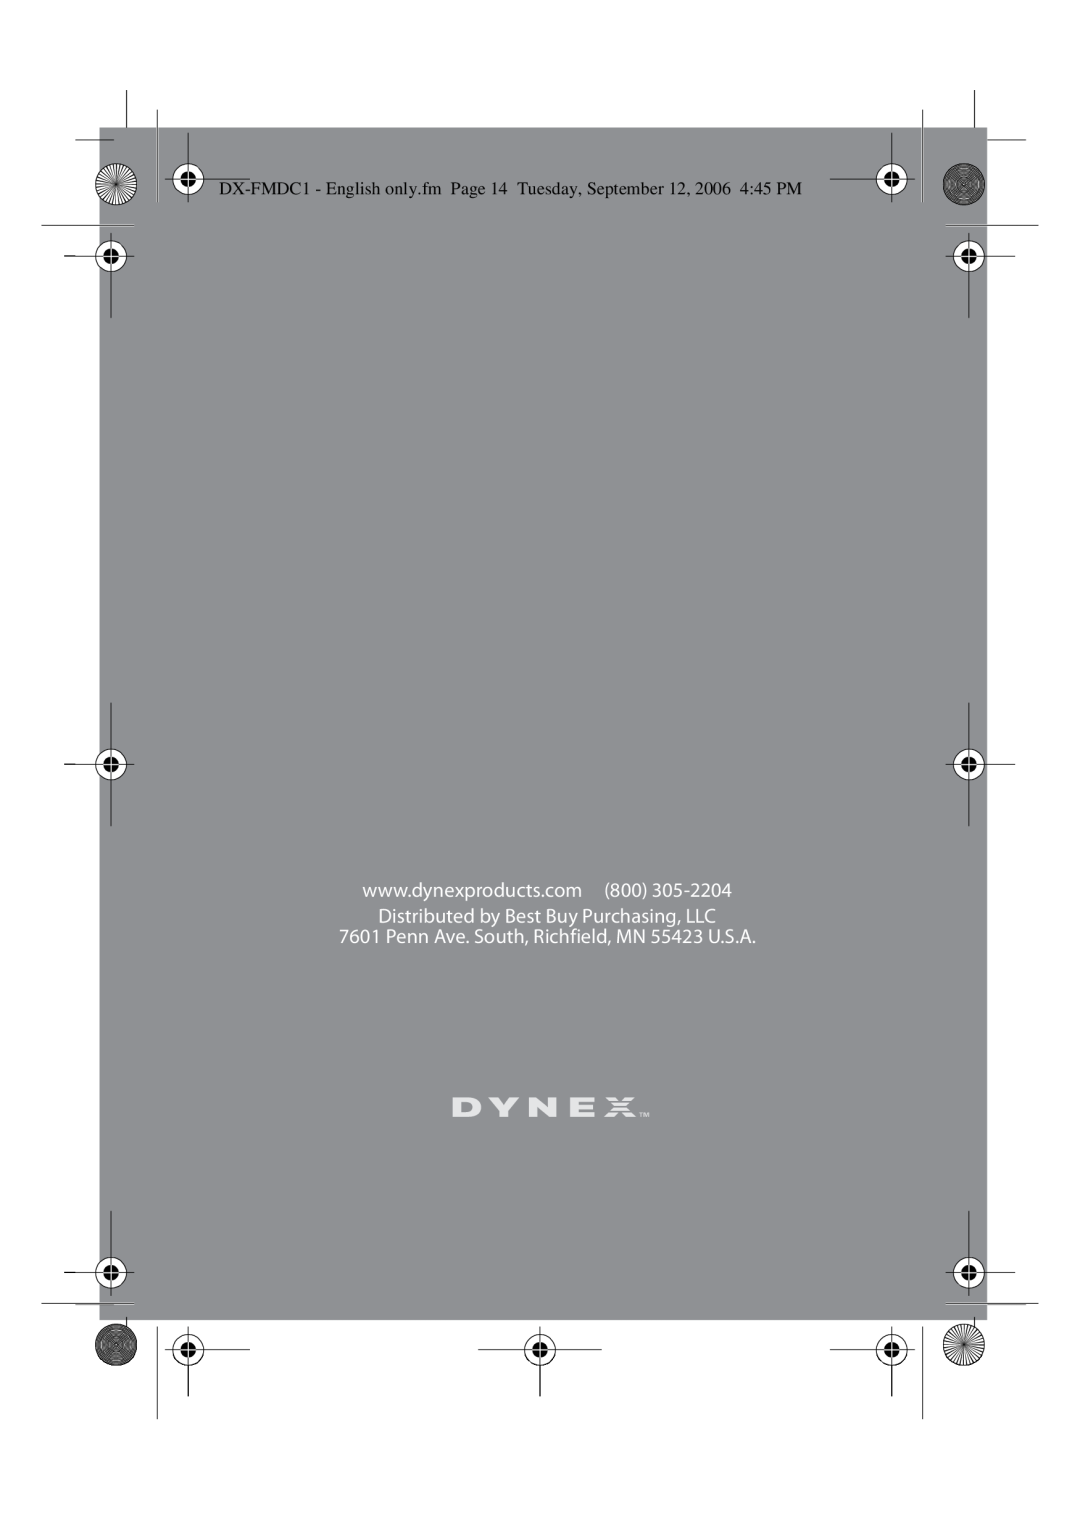 Dynex DX-FMDC1 manual Distributed by Best Buy Purchasing, LLC, Penn Ave. South, Richfield, MN 55423 U.S.A 